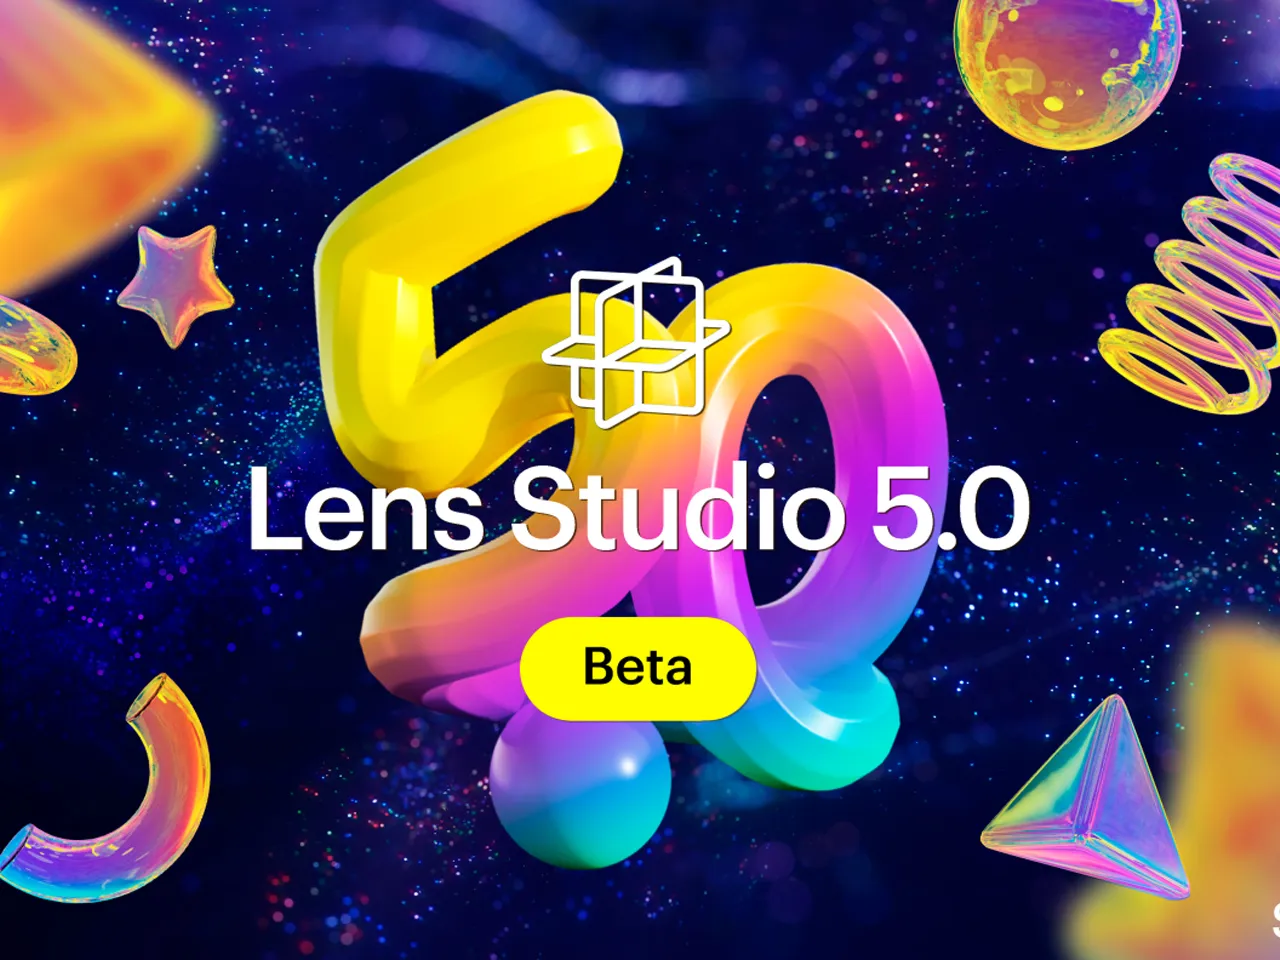 Snap unveils Lens Studio 5.0 Beta with OpenAI Integration for advanced AR development